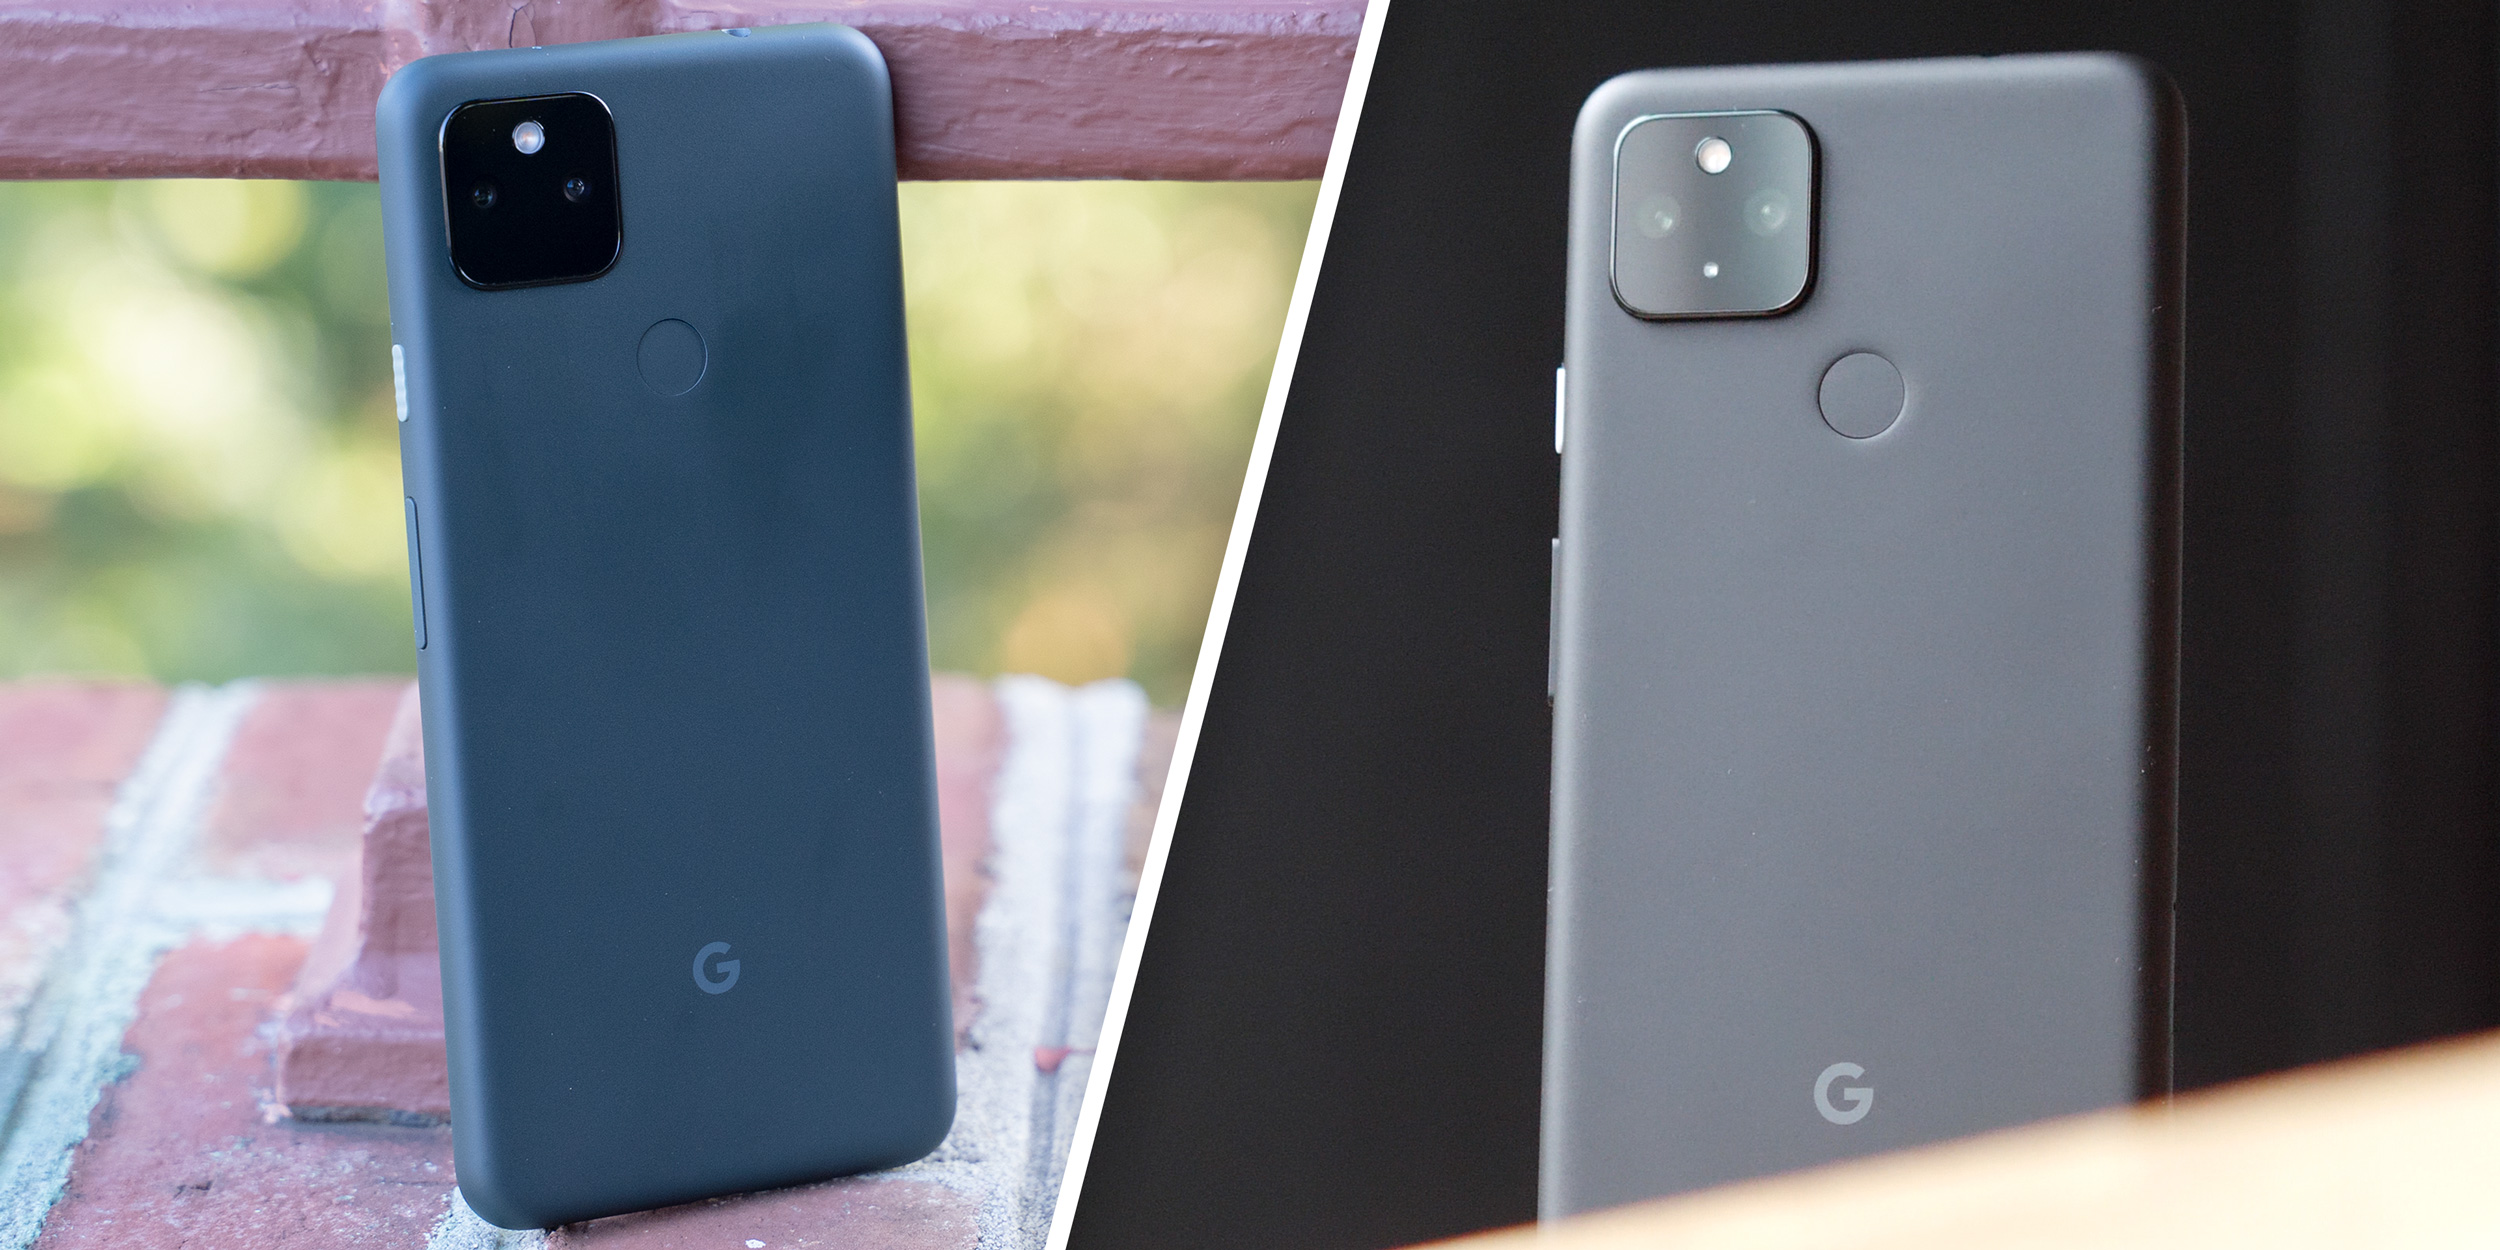 Google Pixel 3 vs Pixel 4 comparison: Should you upgrade? - 9to5Google